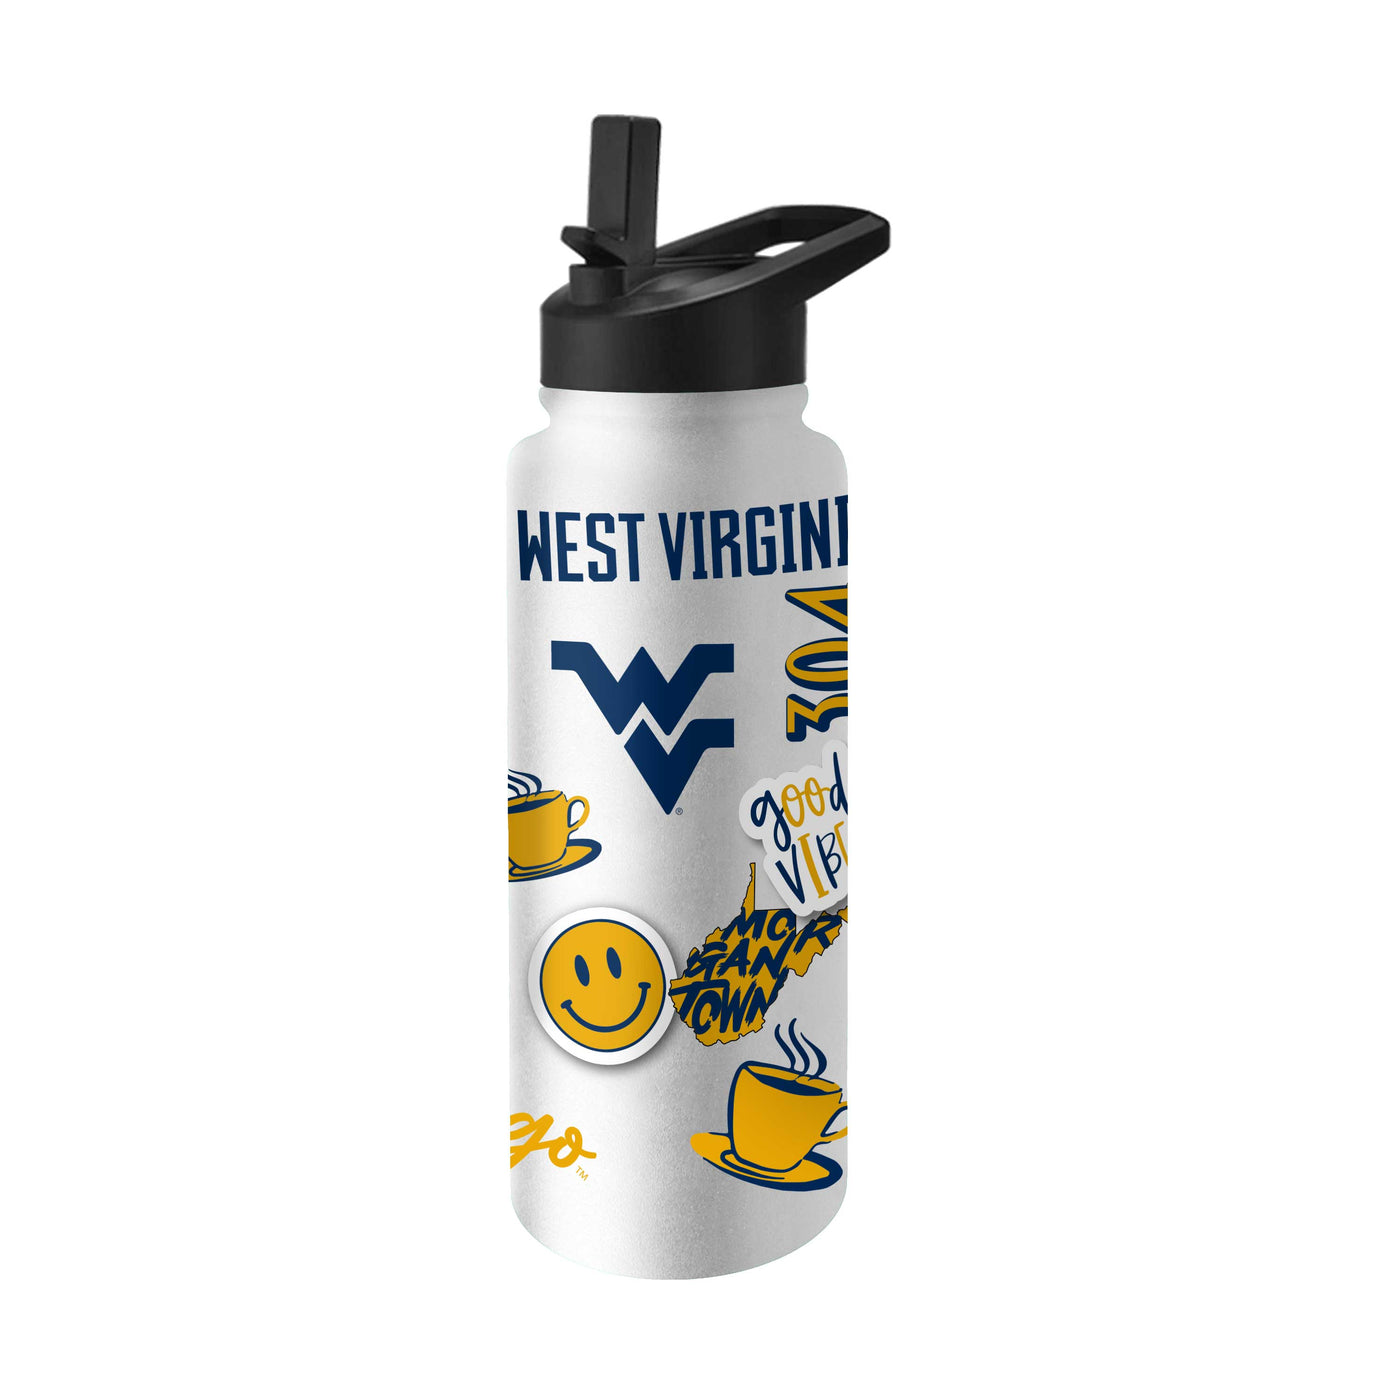 West Virginia 34oz Native Quencher Bottle